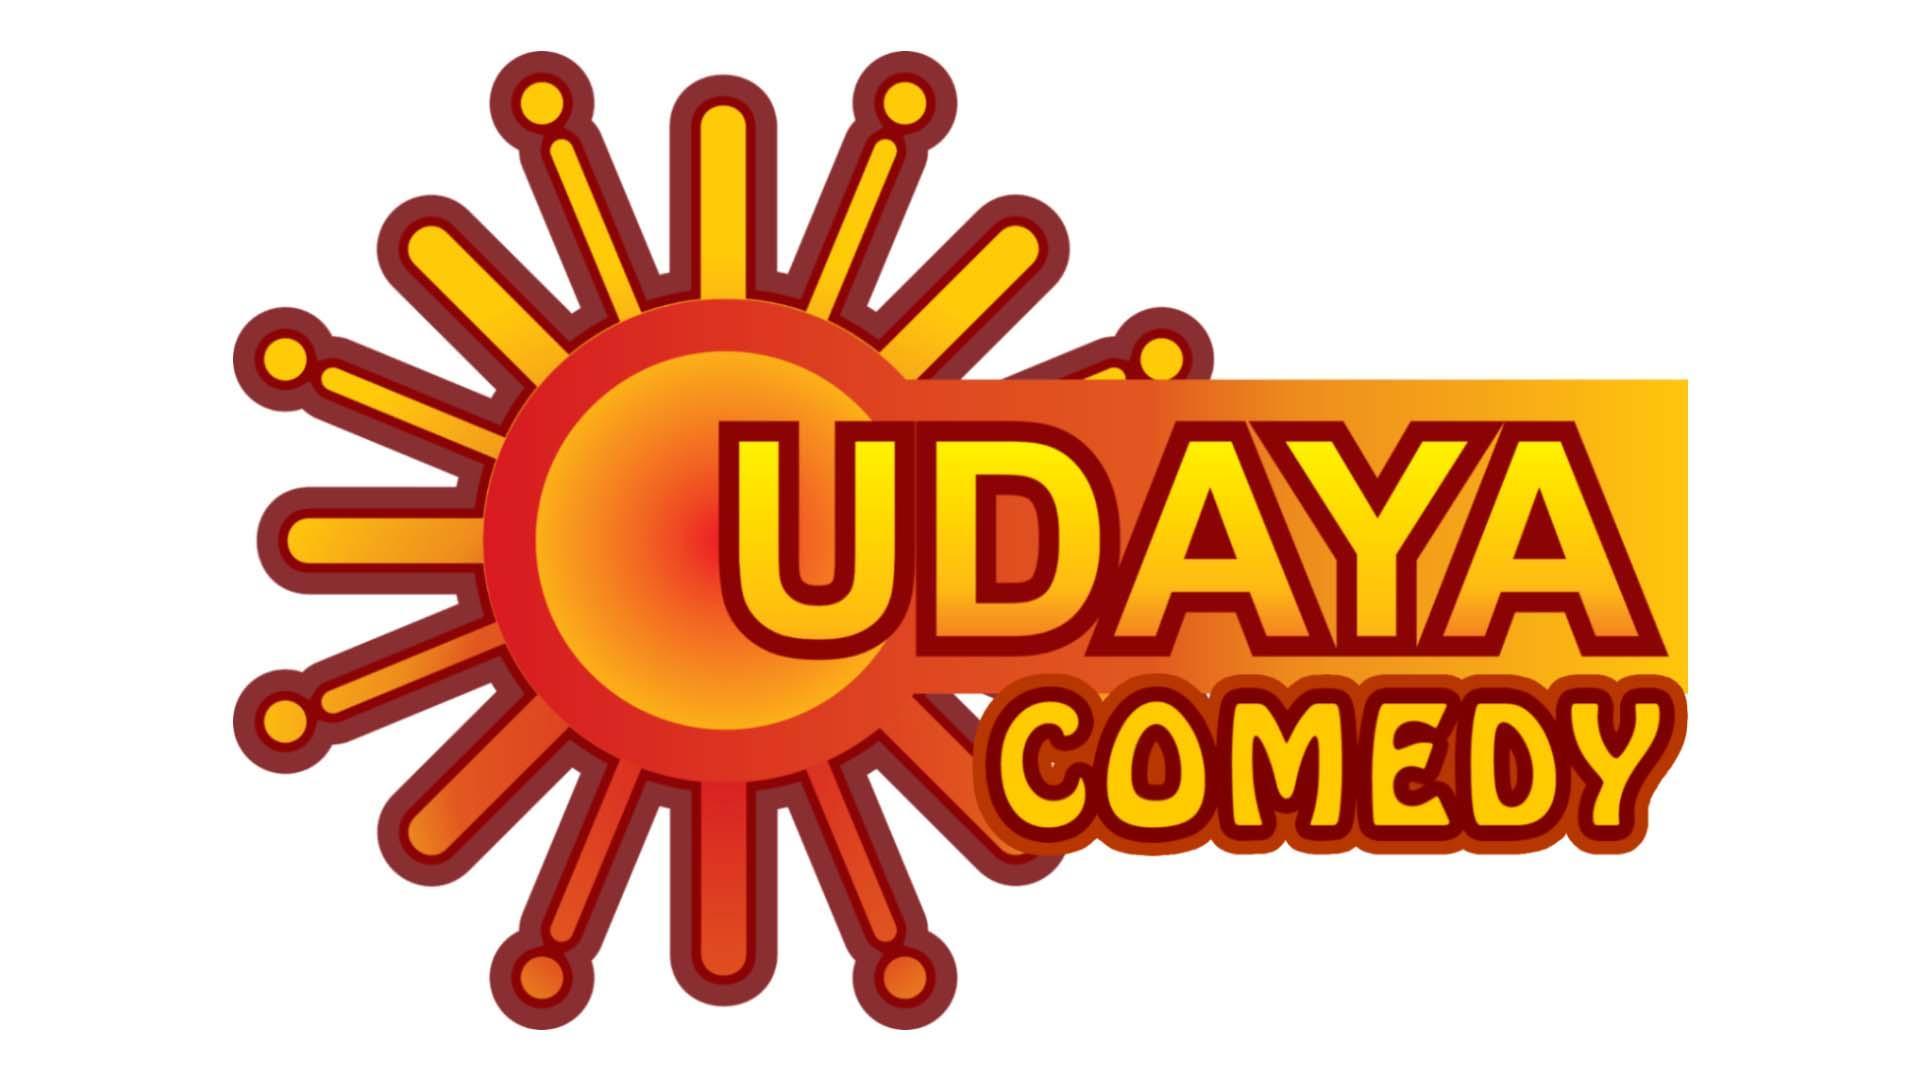 udaya tv live free